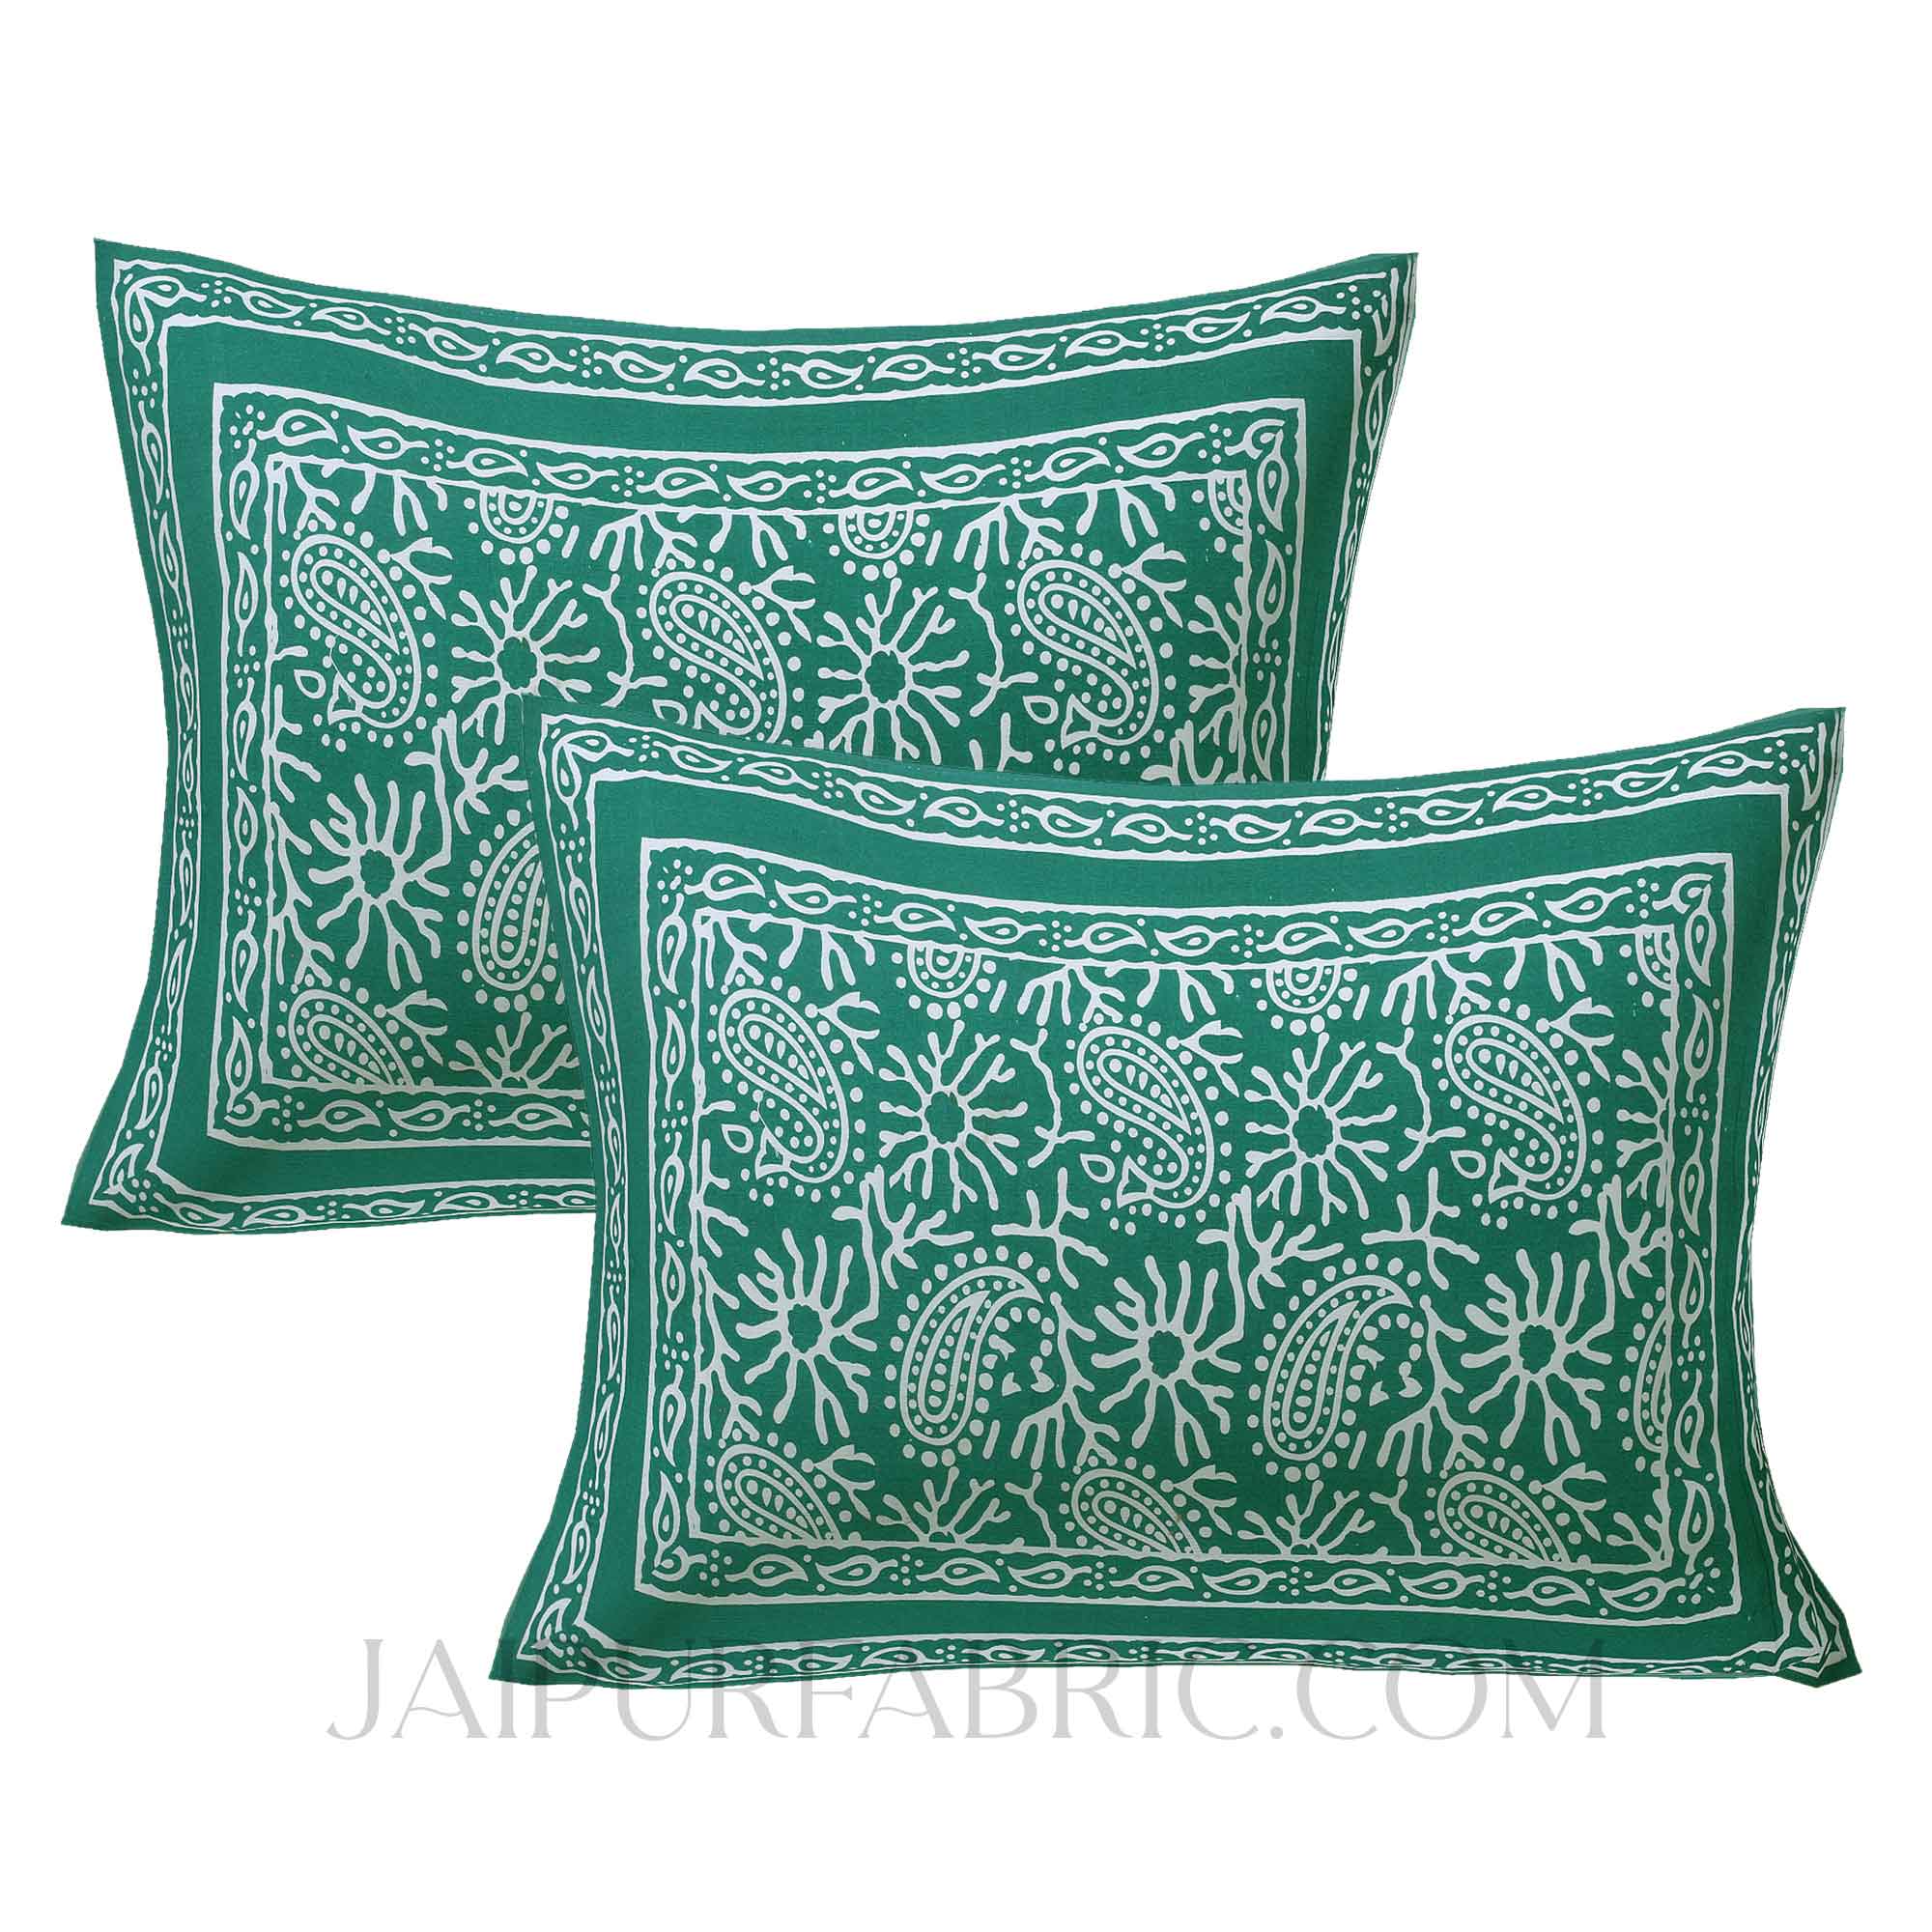 Aqua Kingdom Green Double Bedsheet